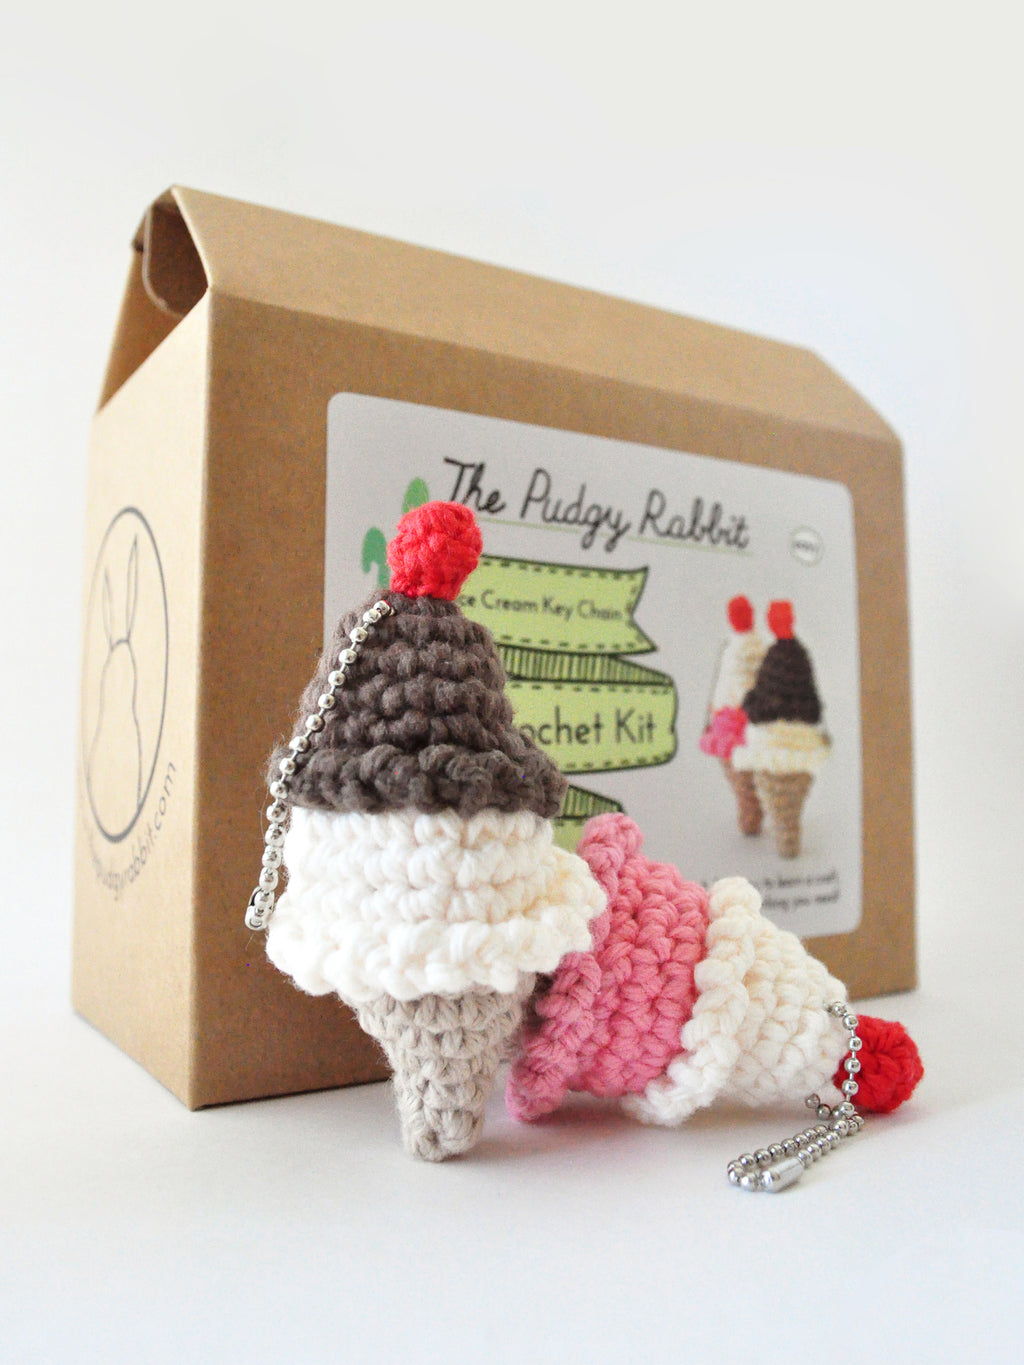 Crochet kit to make two mini ice cream key chains 